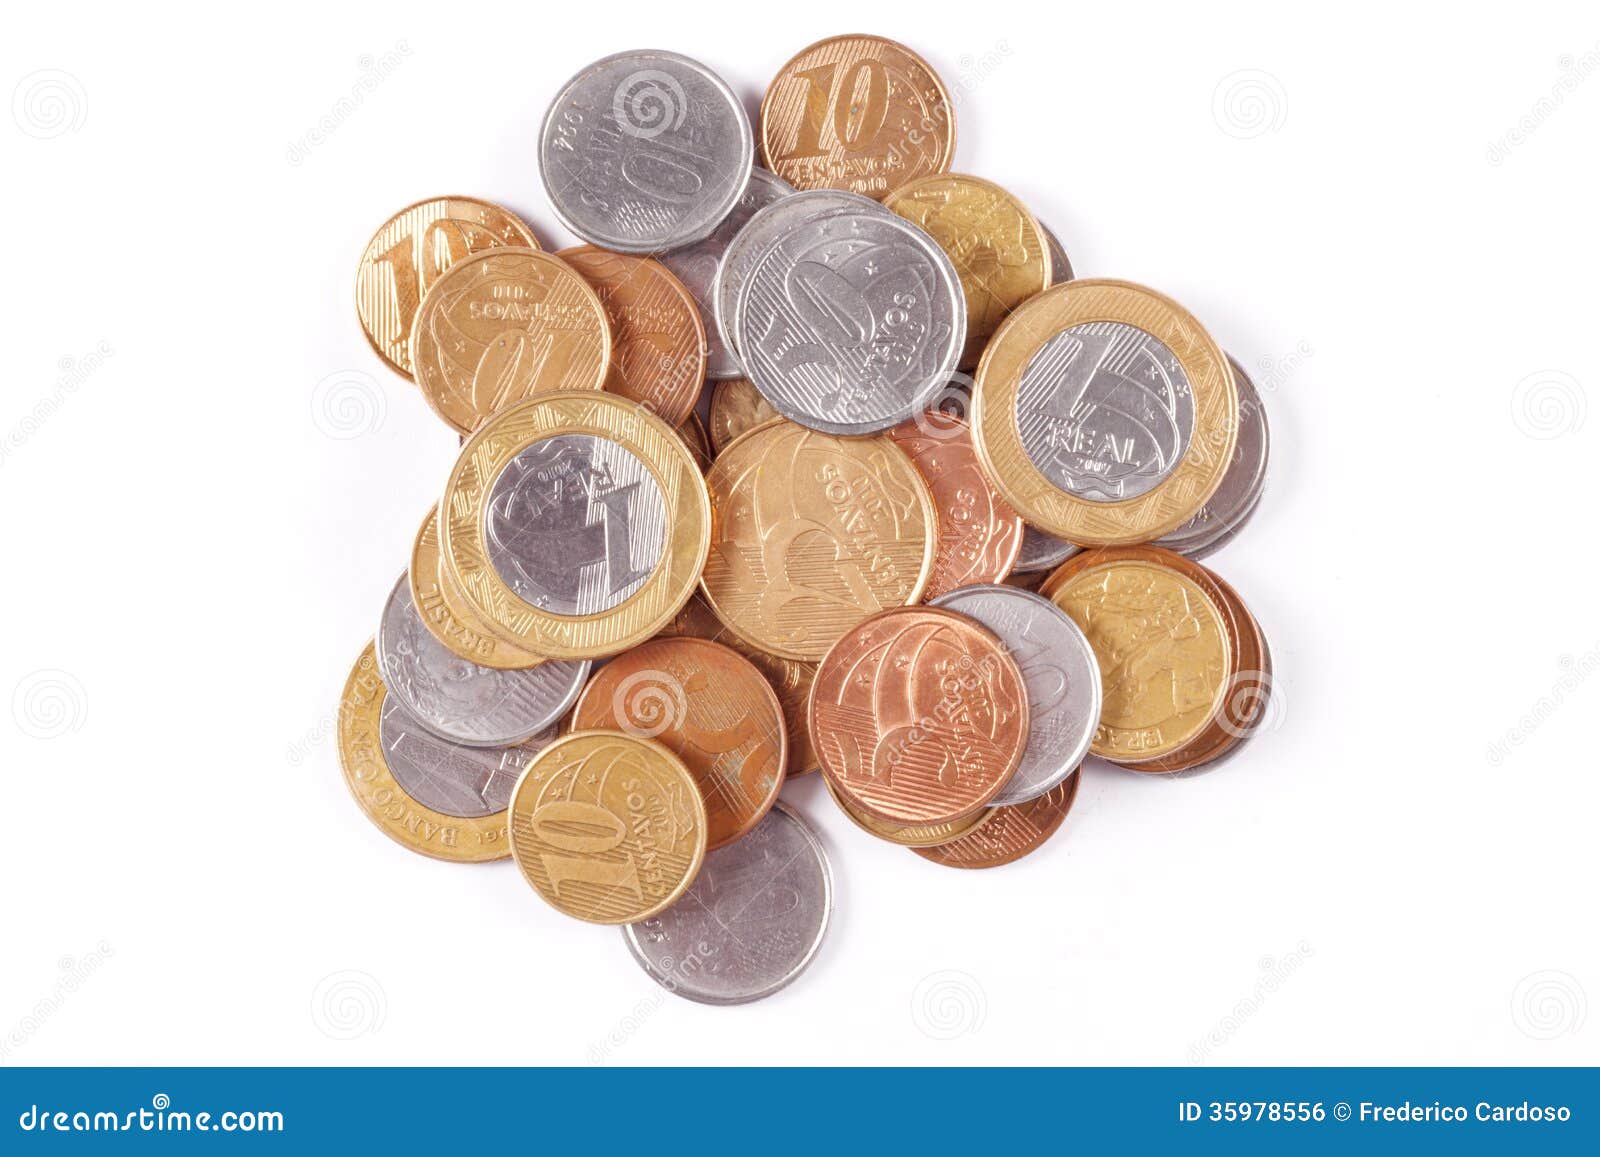 brazilian money coins